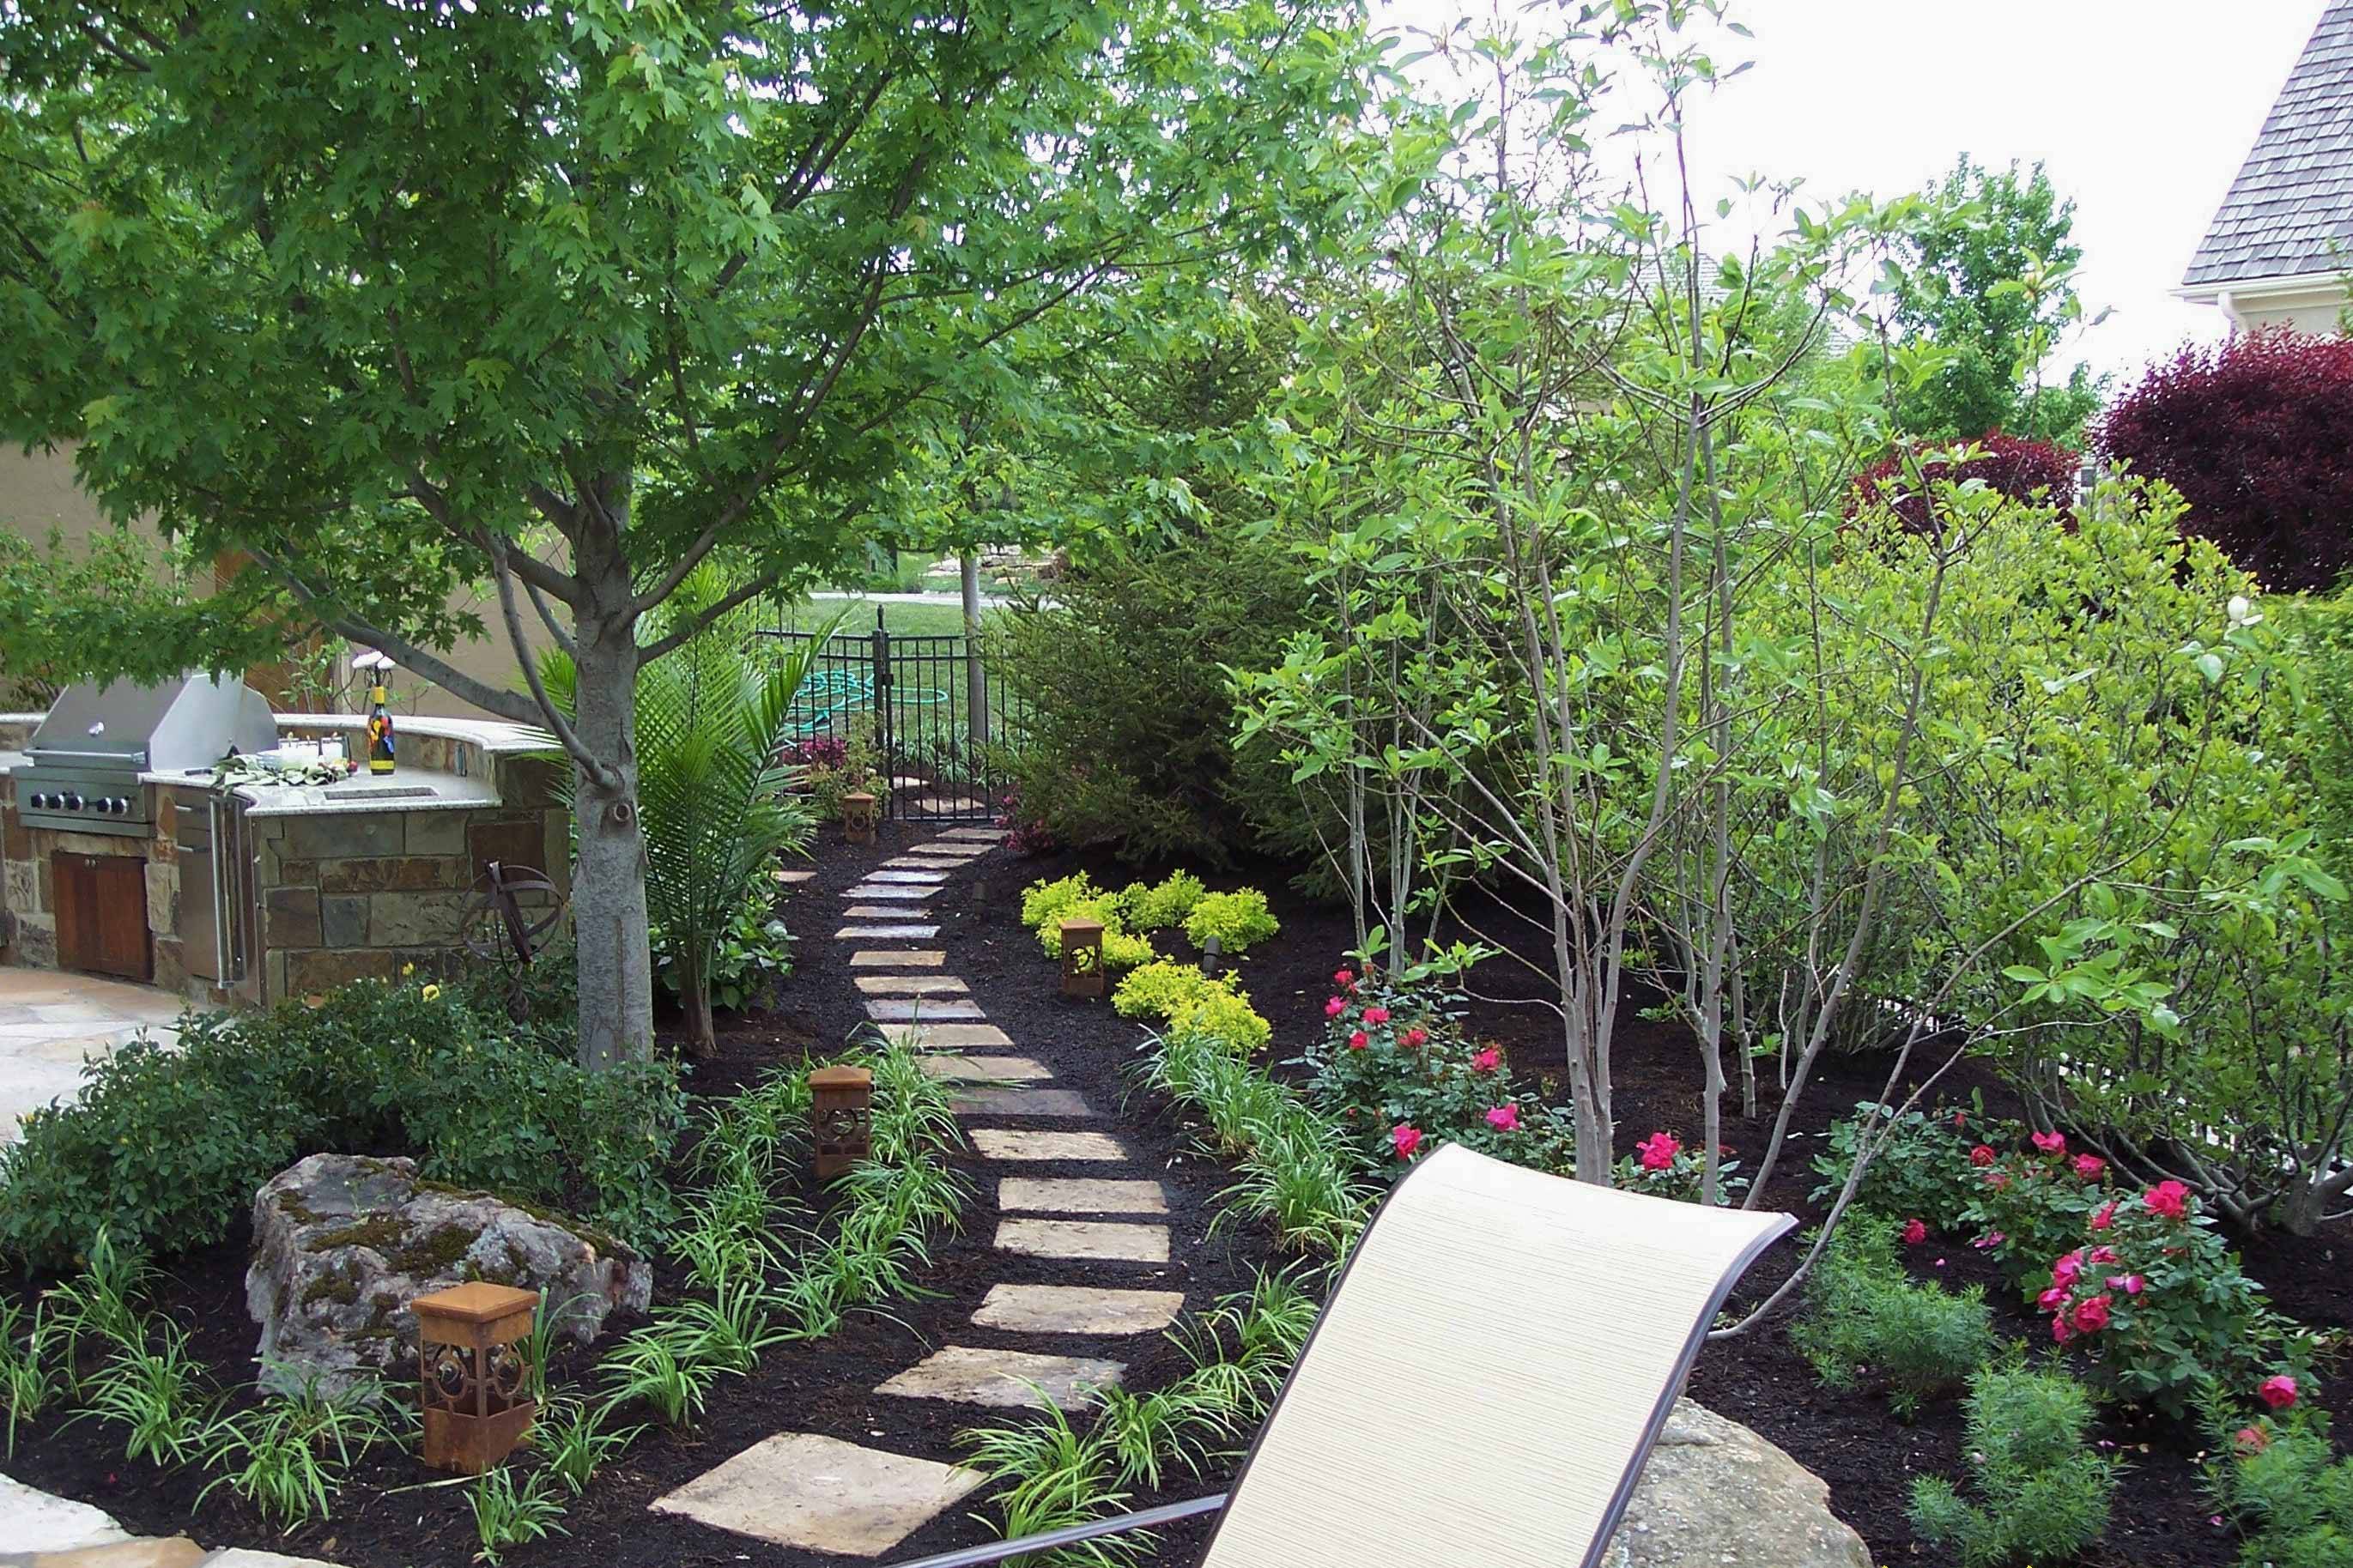 Garden Home Landscape Ideas